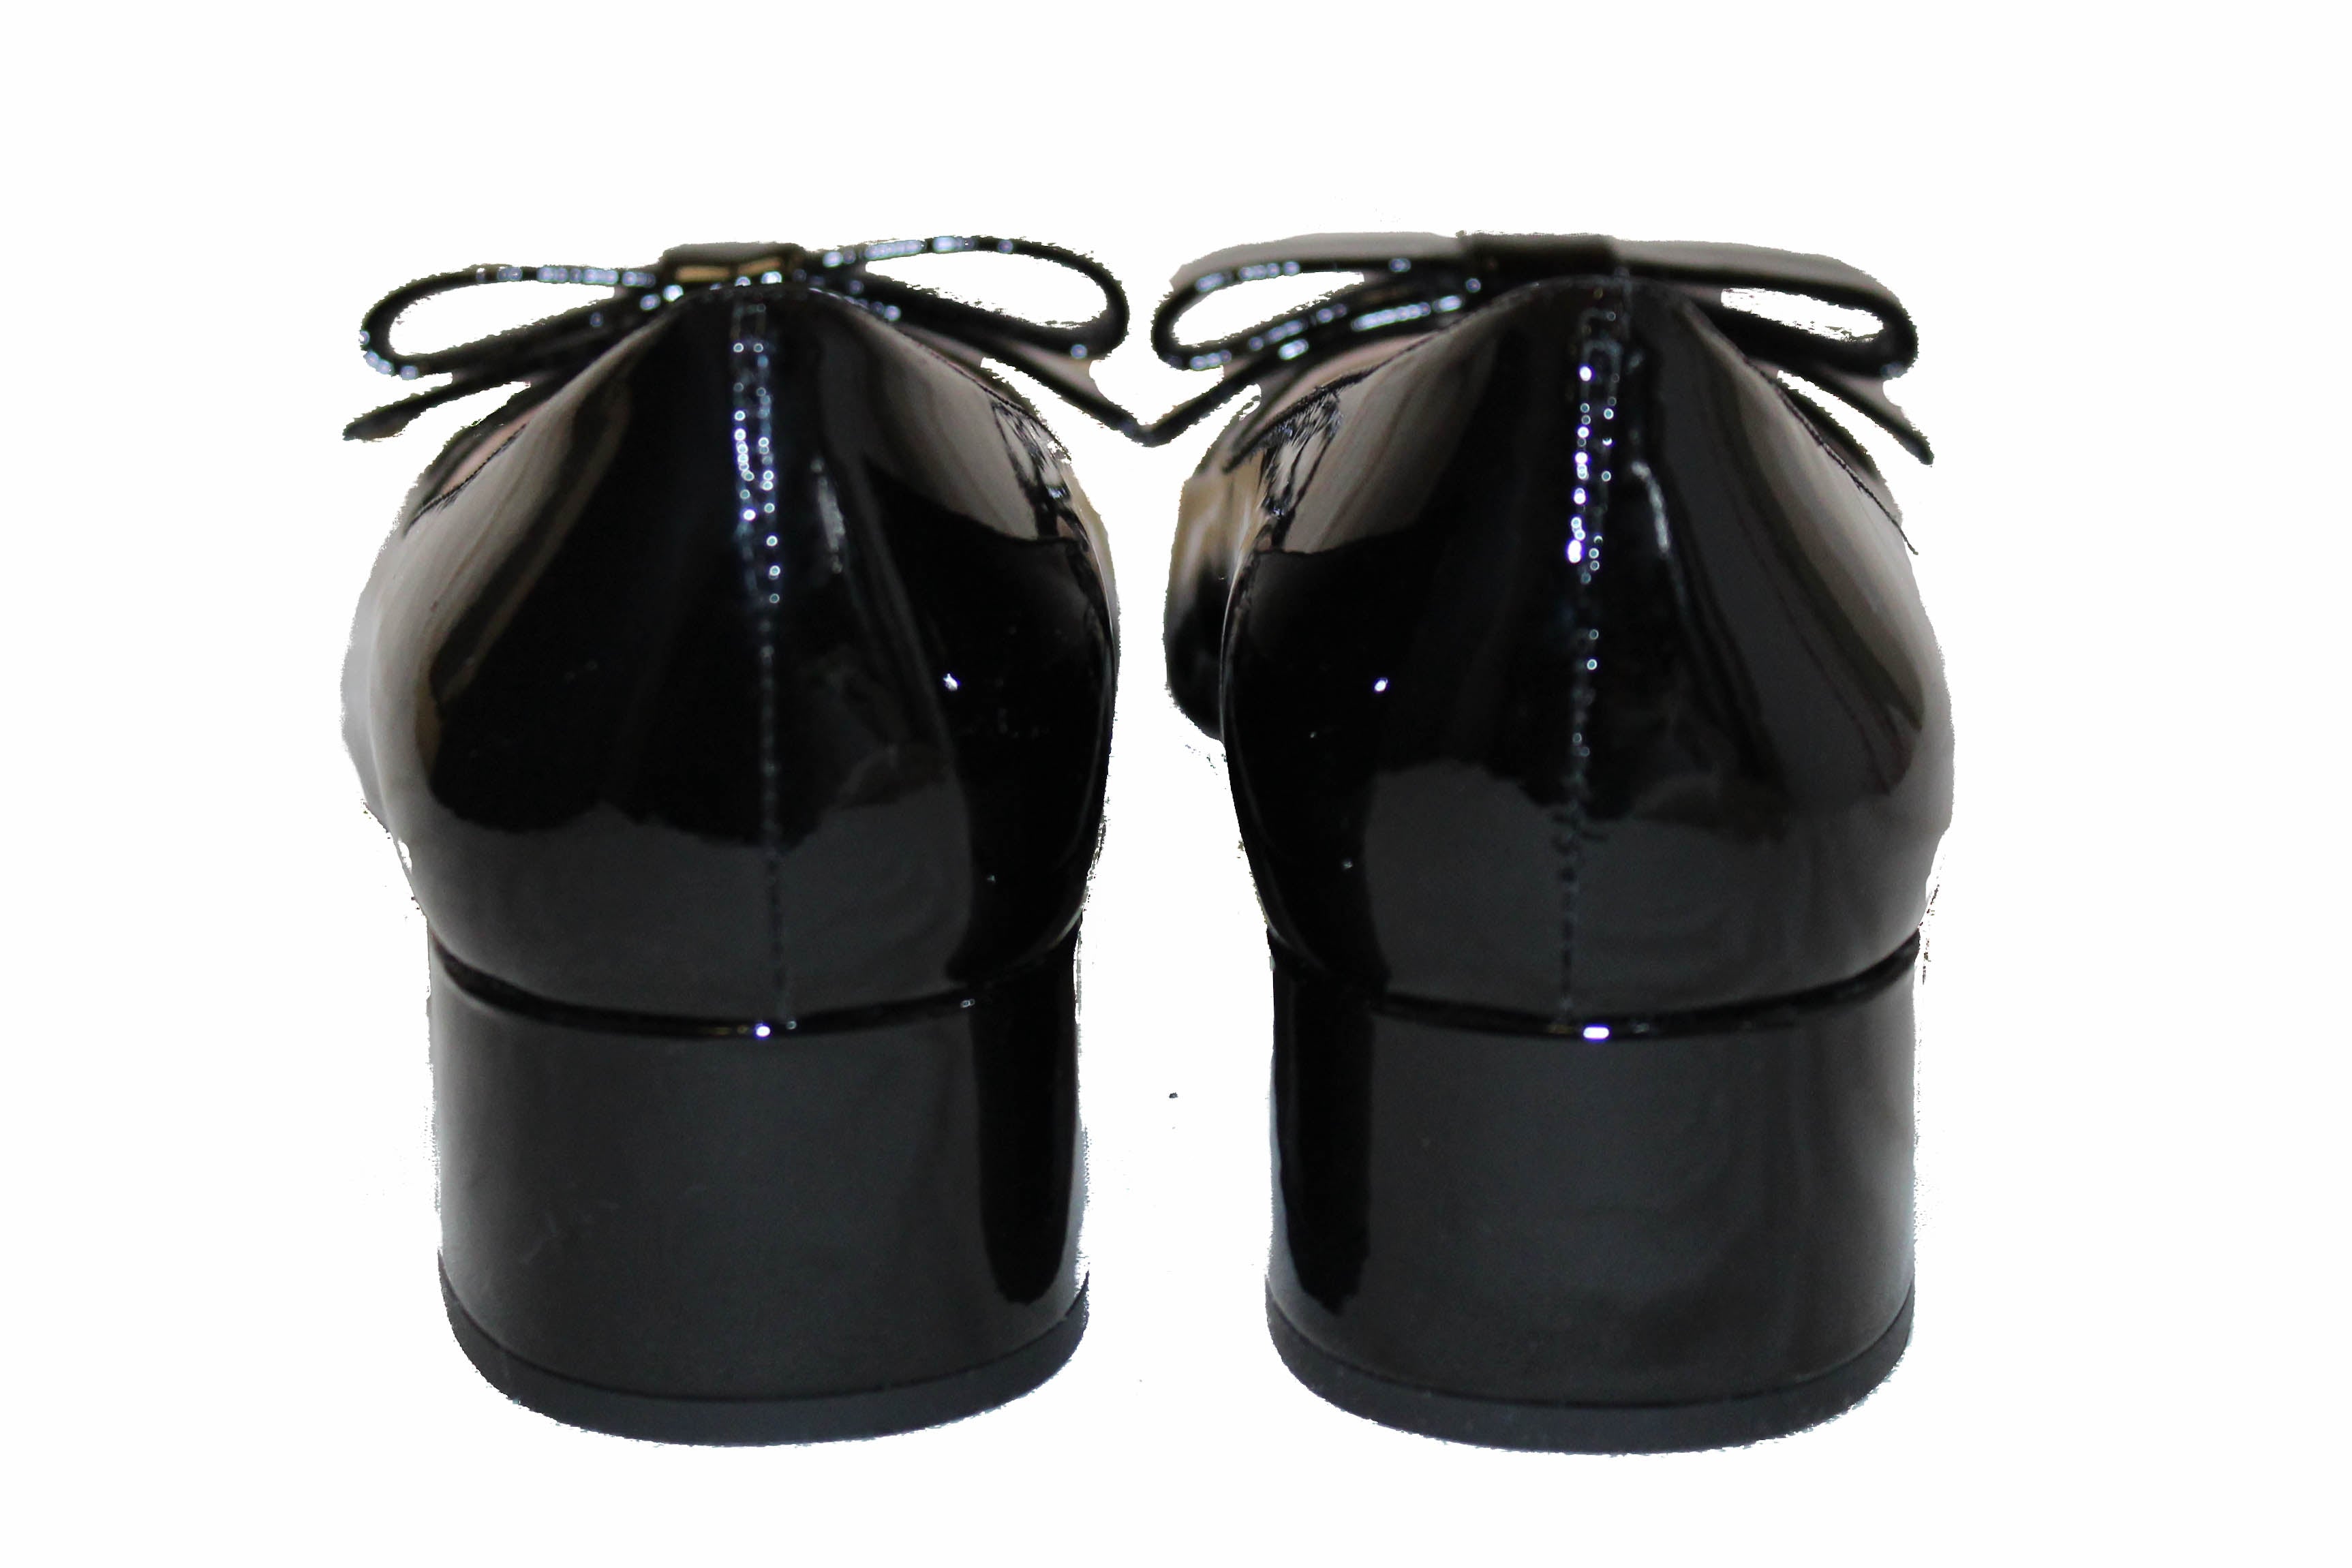 Authentic Prada Bow Black Patent Leather Pumps Size 37